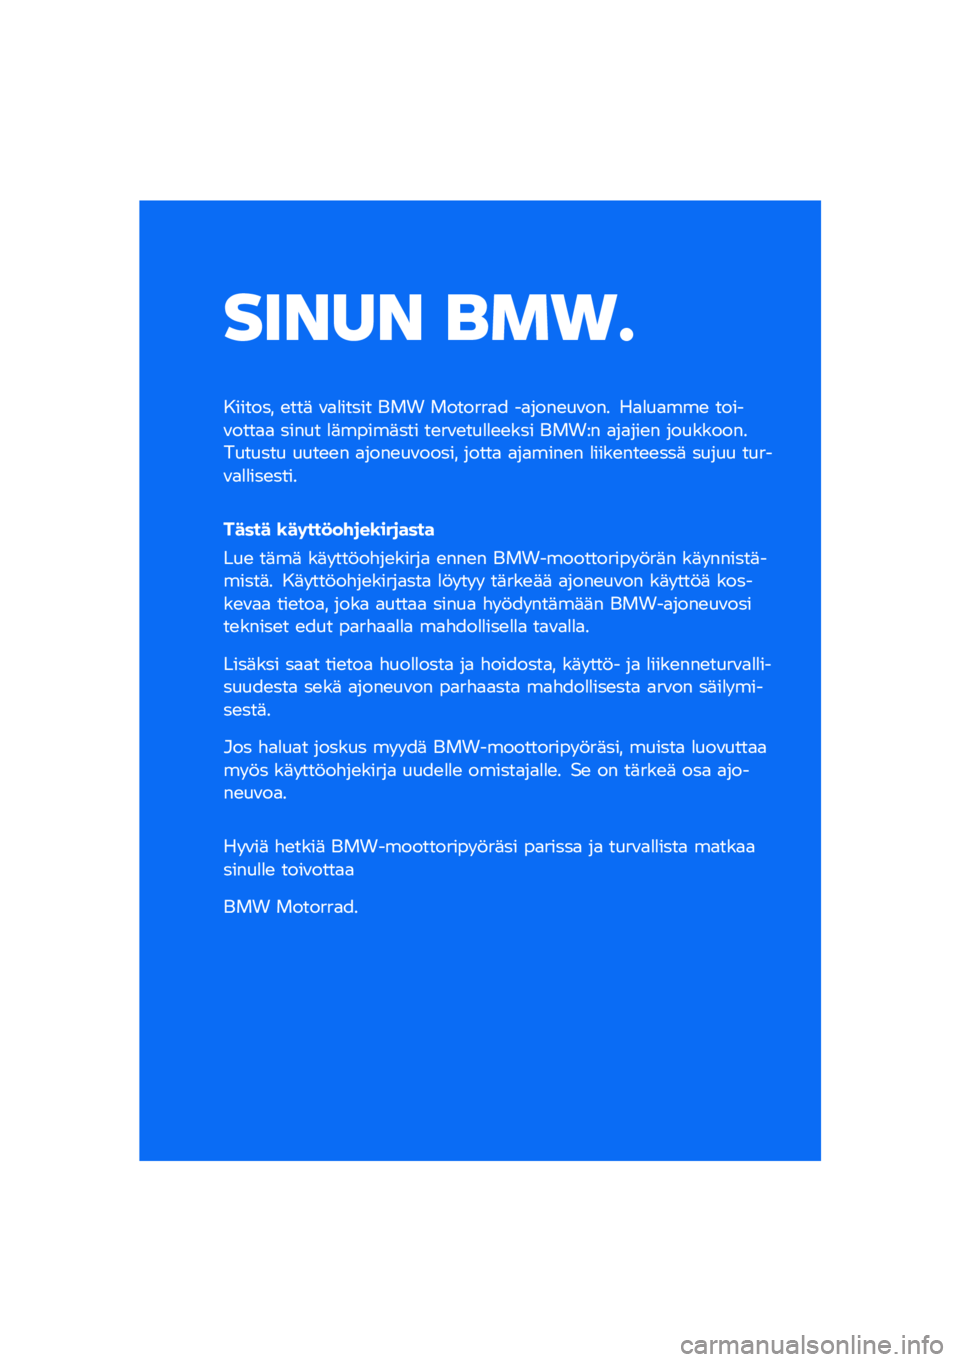 BMW MOTORRAD R 1250 RS 2021  Käsikirja (in Finnish) ����� ���\b�	
������� �\b���	 �\f�
�
����� ��� �������
� ��
����\b��\f��� ��
�
��
���\b �����\f����
�
 ����� �
�	�����	��� ��\b��\f�\b�